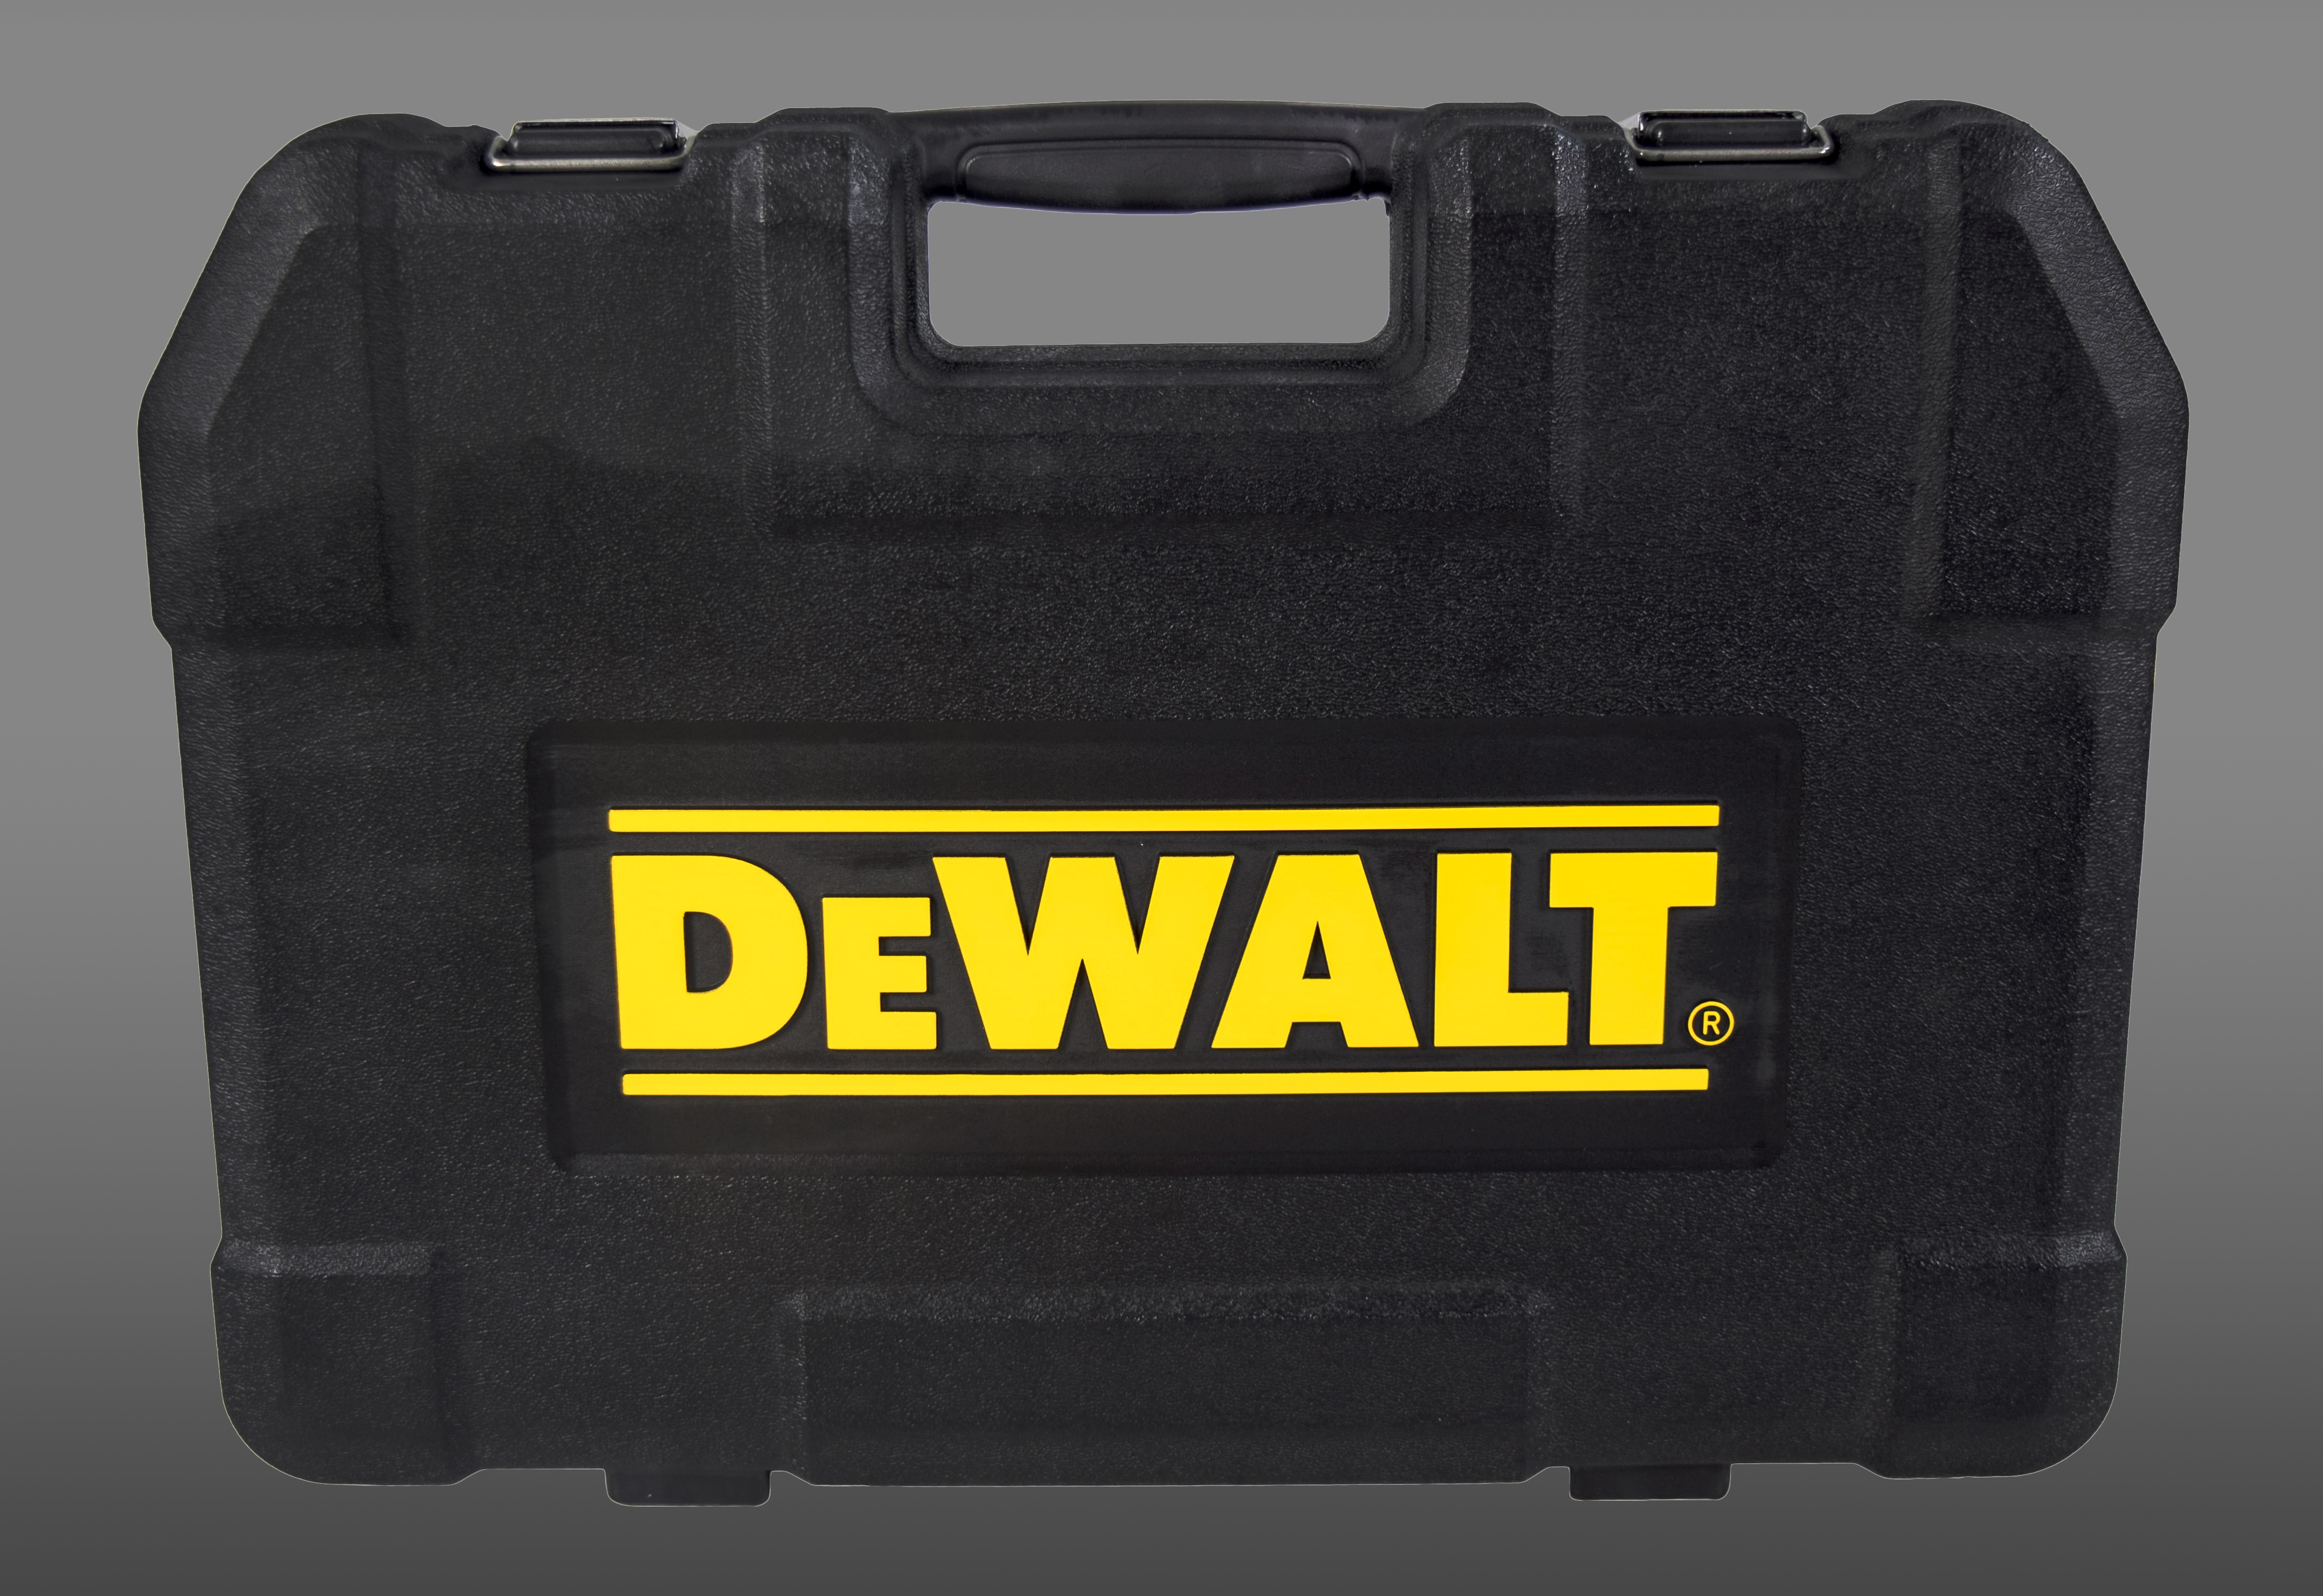 Dewalt DWMT73802 Mechanics Tool Kit Set with Case (142 Piece) - image 1 of 8